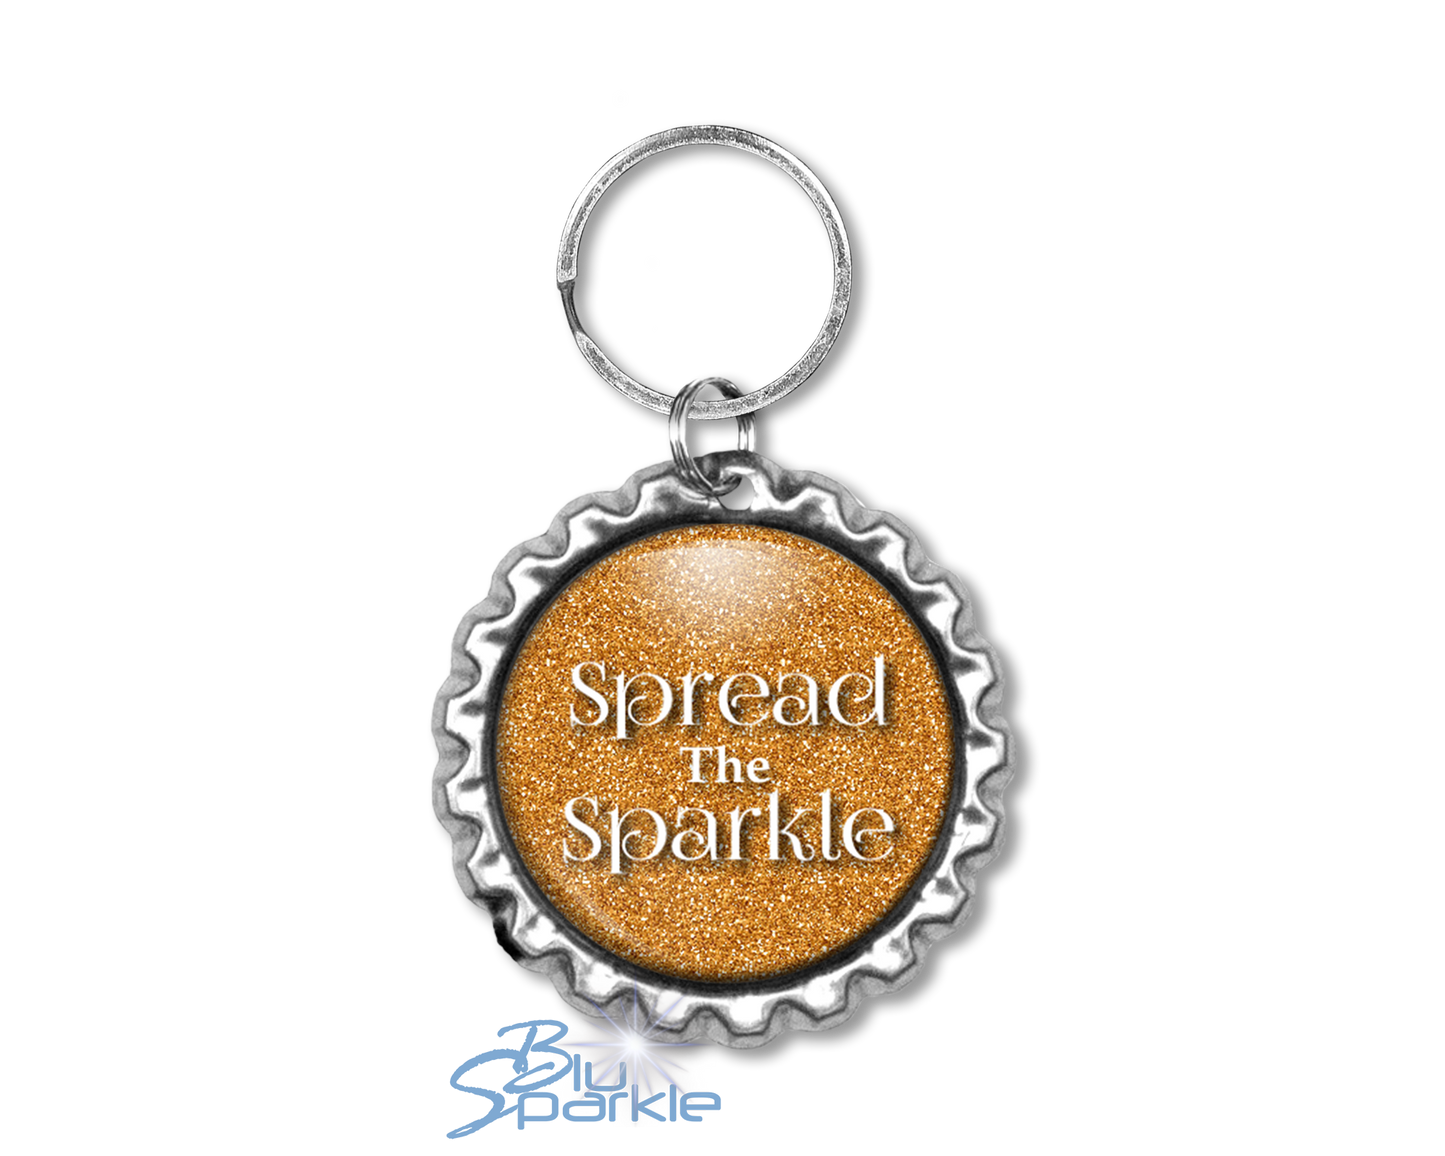 Spread the Sparkle - Key Chains